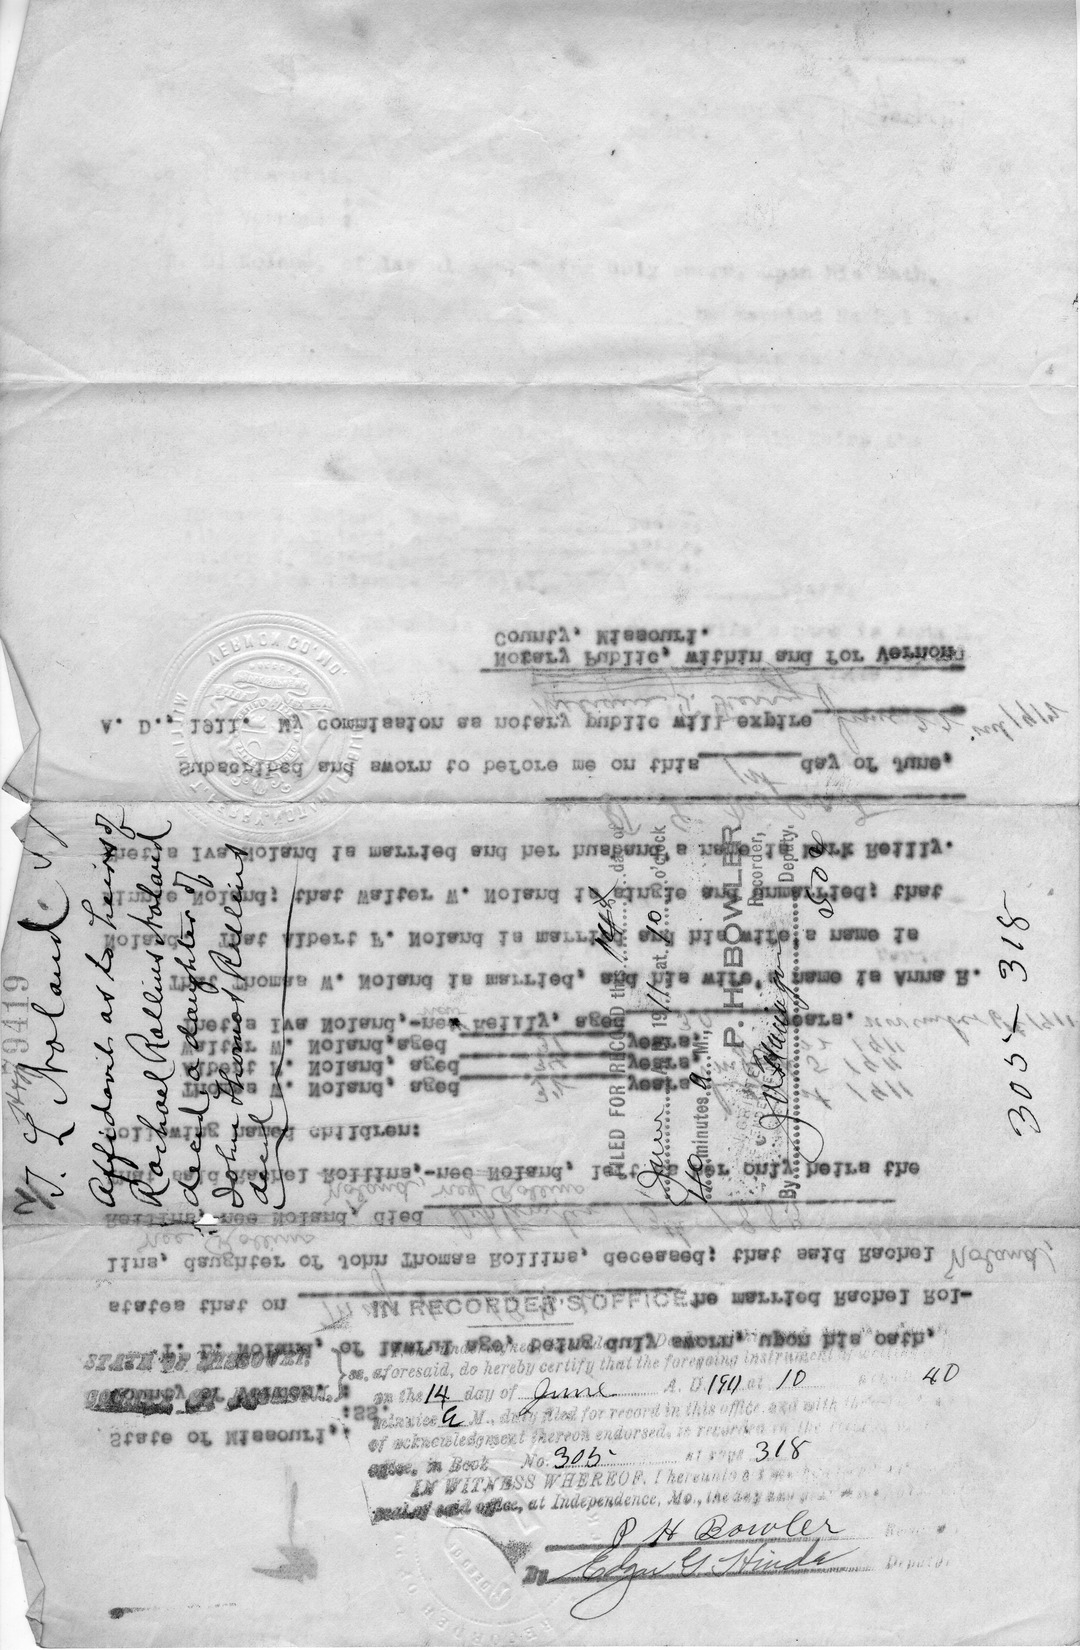 Affidavit of T. L. Noland